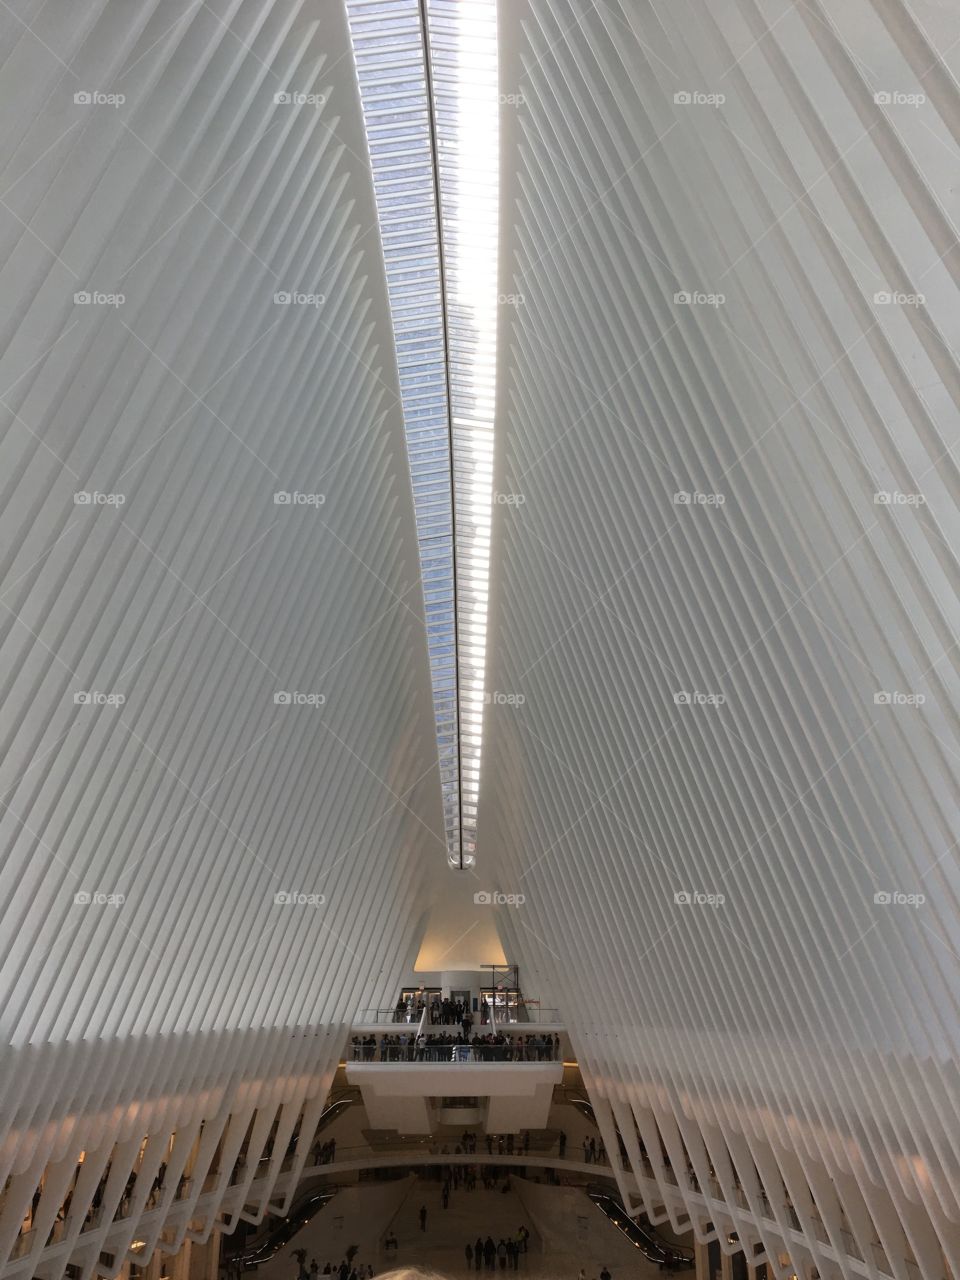 Stunning view of the World Trade Center transit hub in New York City